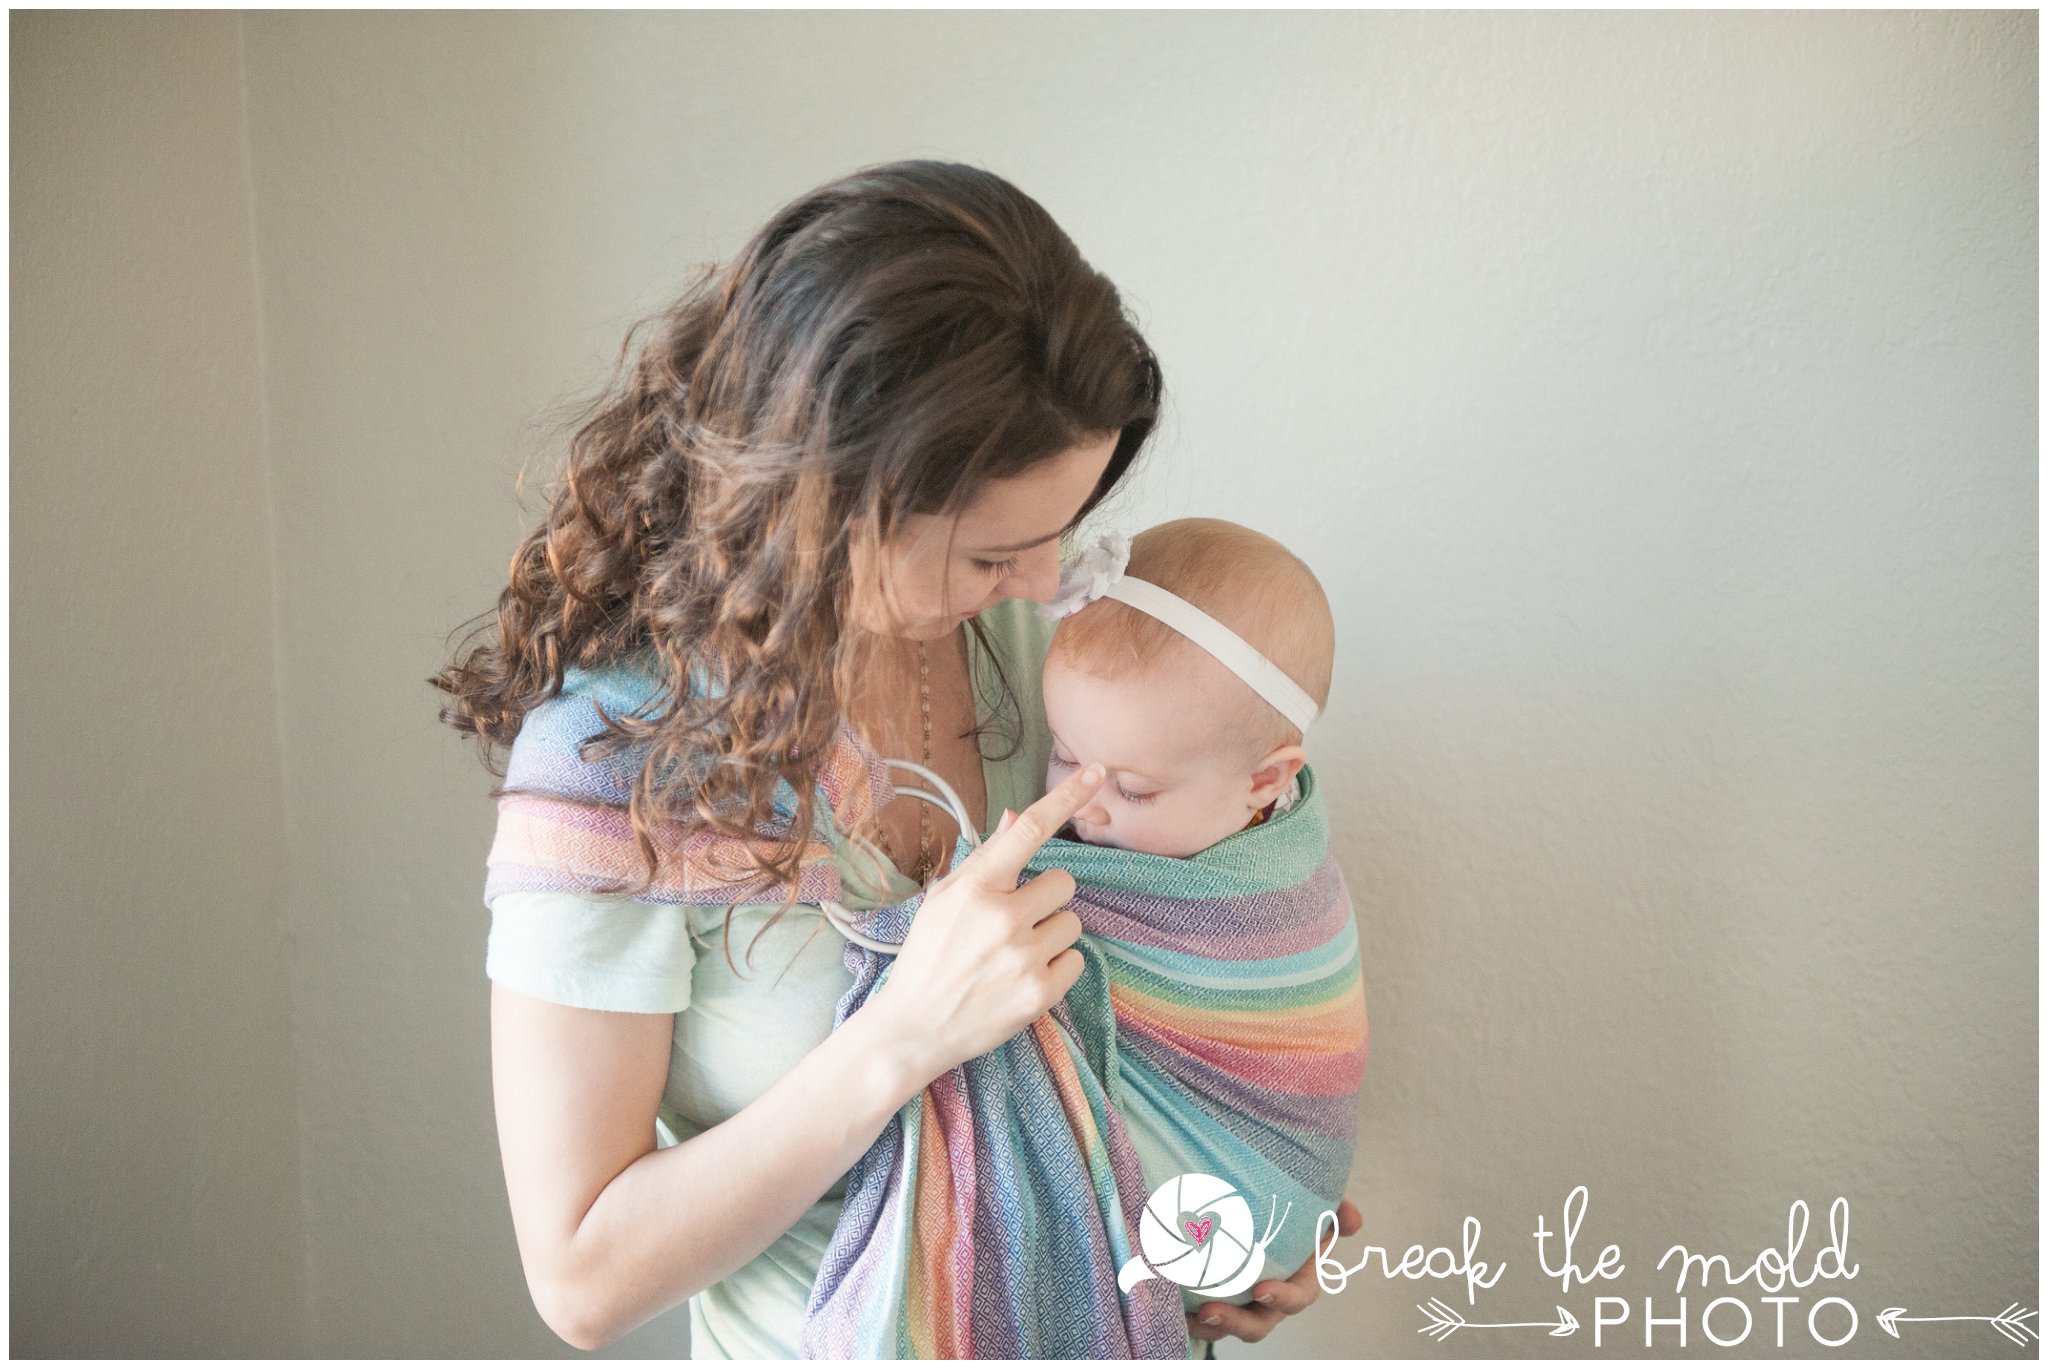 break-the-mold-photo-nursing-body-love-baby-pregnant-women-powerful-breastfeeding-sessions_7231.jpg